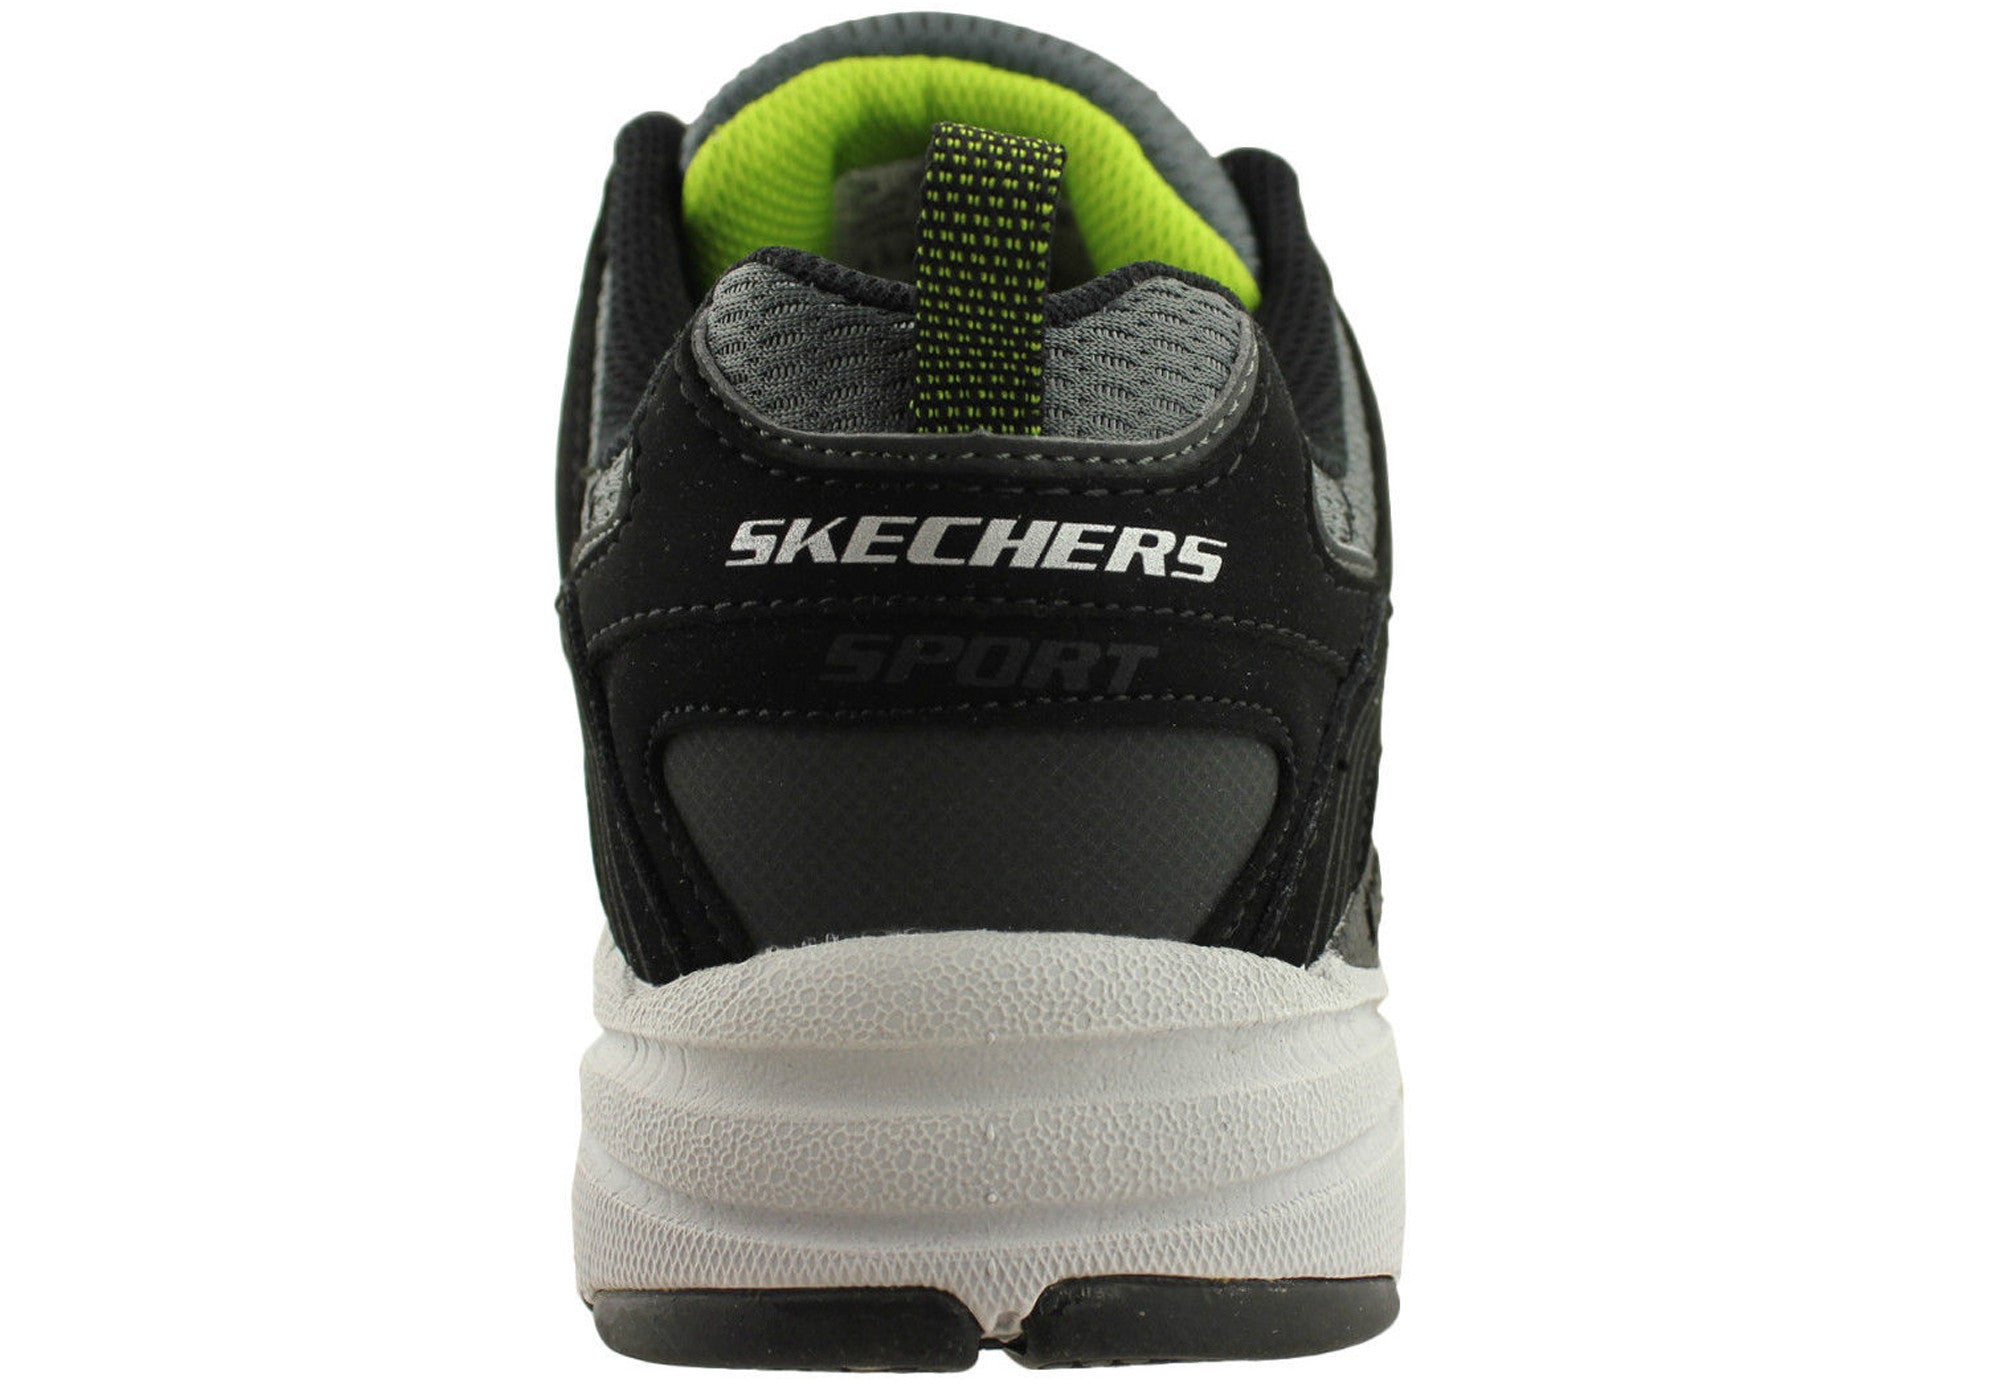 Skechers Reflex Mens Comfortable Lace Up Shoes